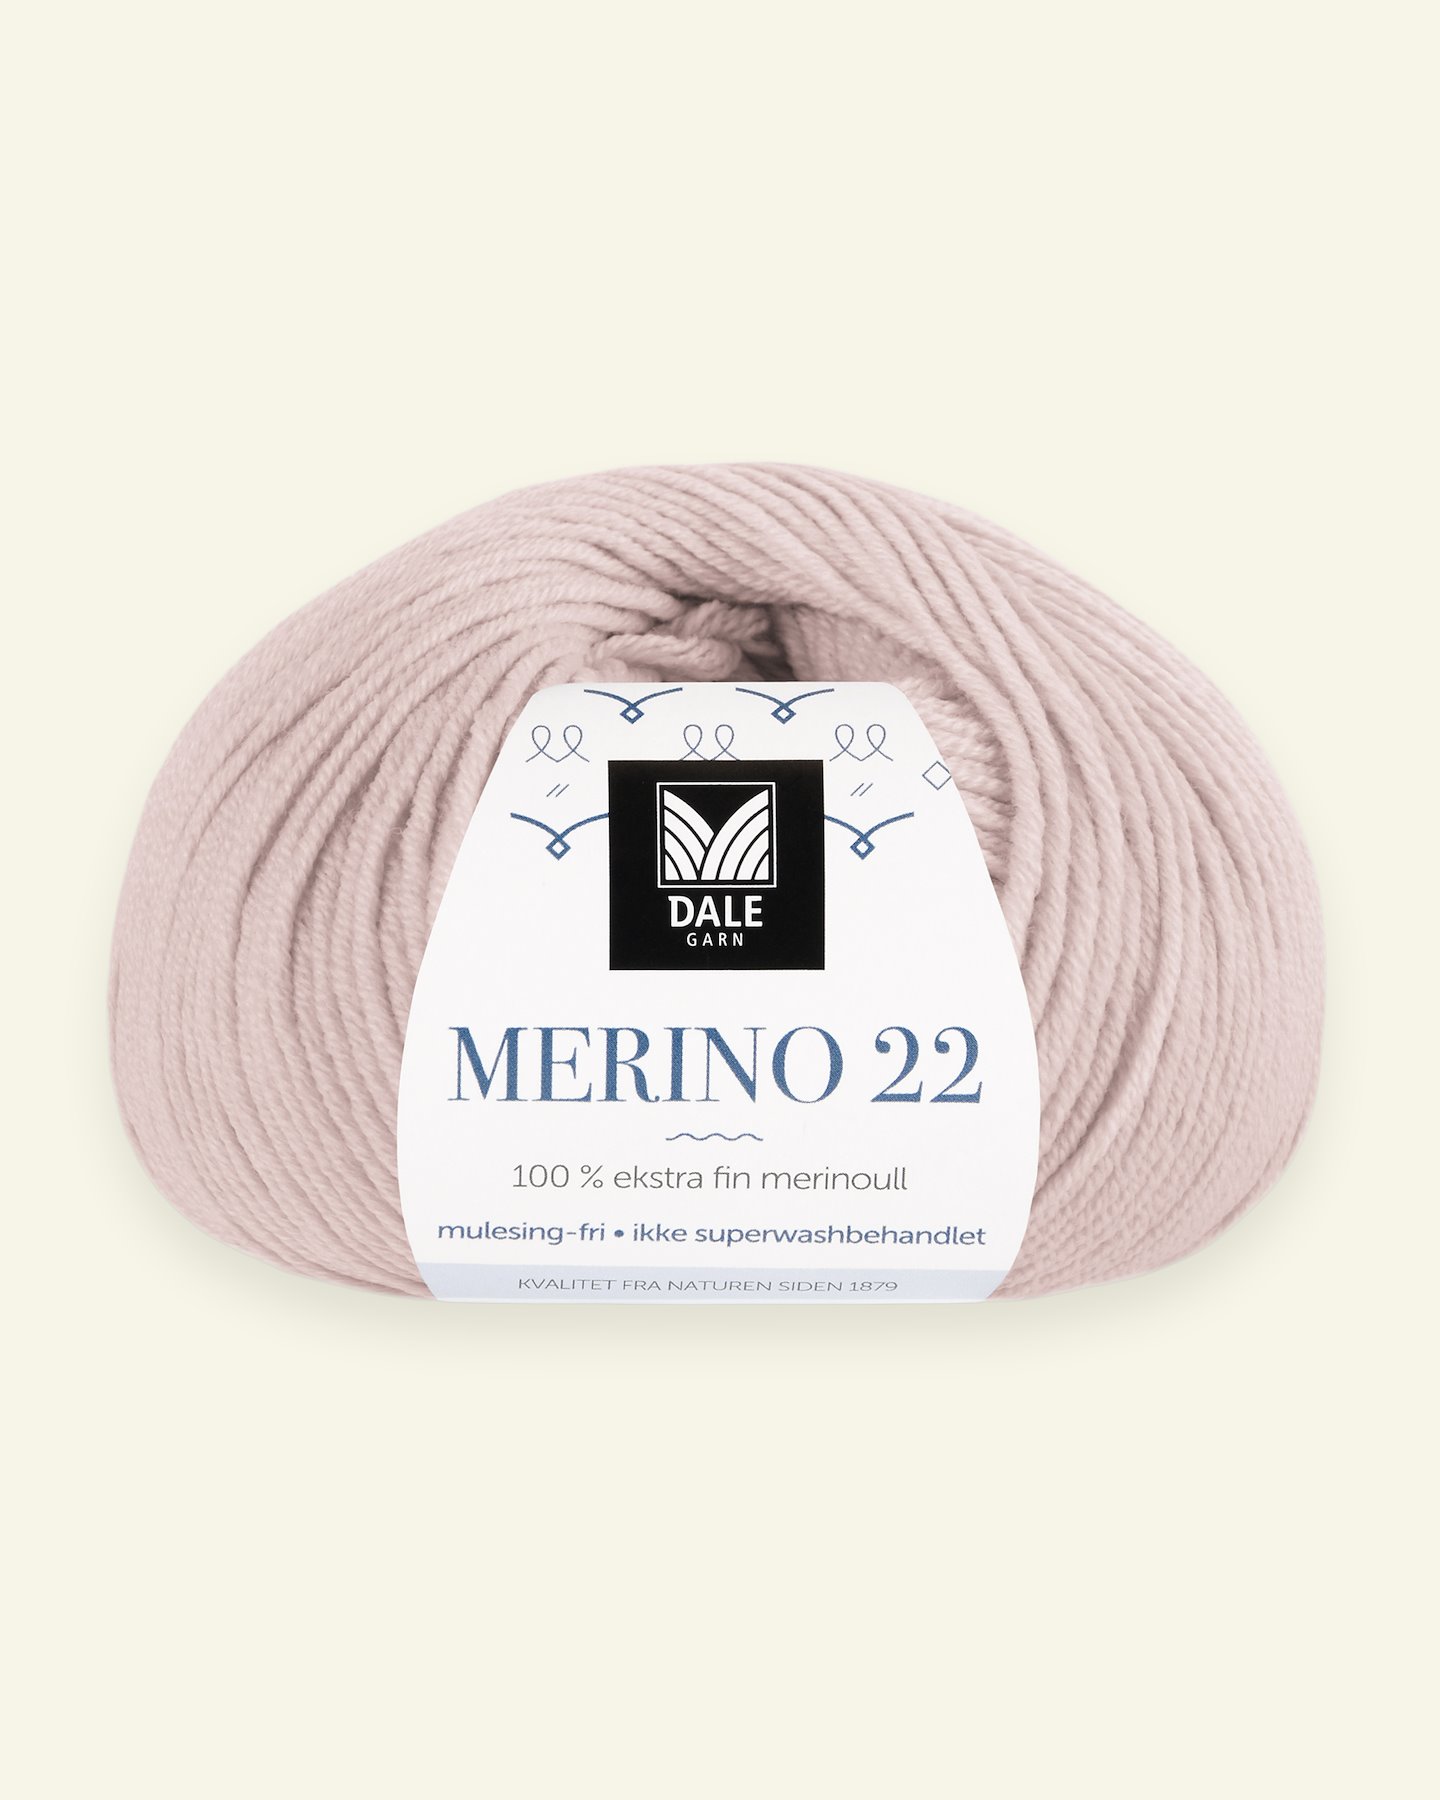 Dale Garn, 100% extra fine merino wool yarn, "Merino 22", dusty rose 90000394_pack